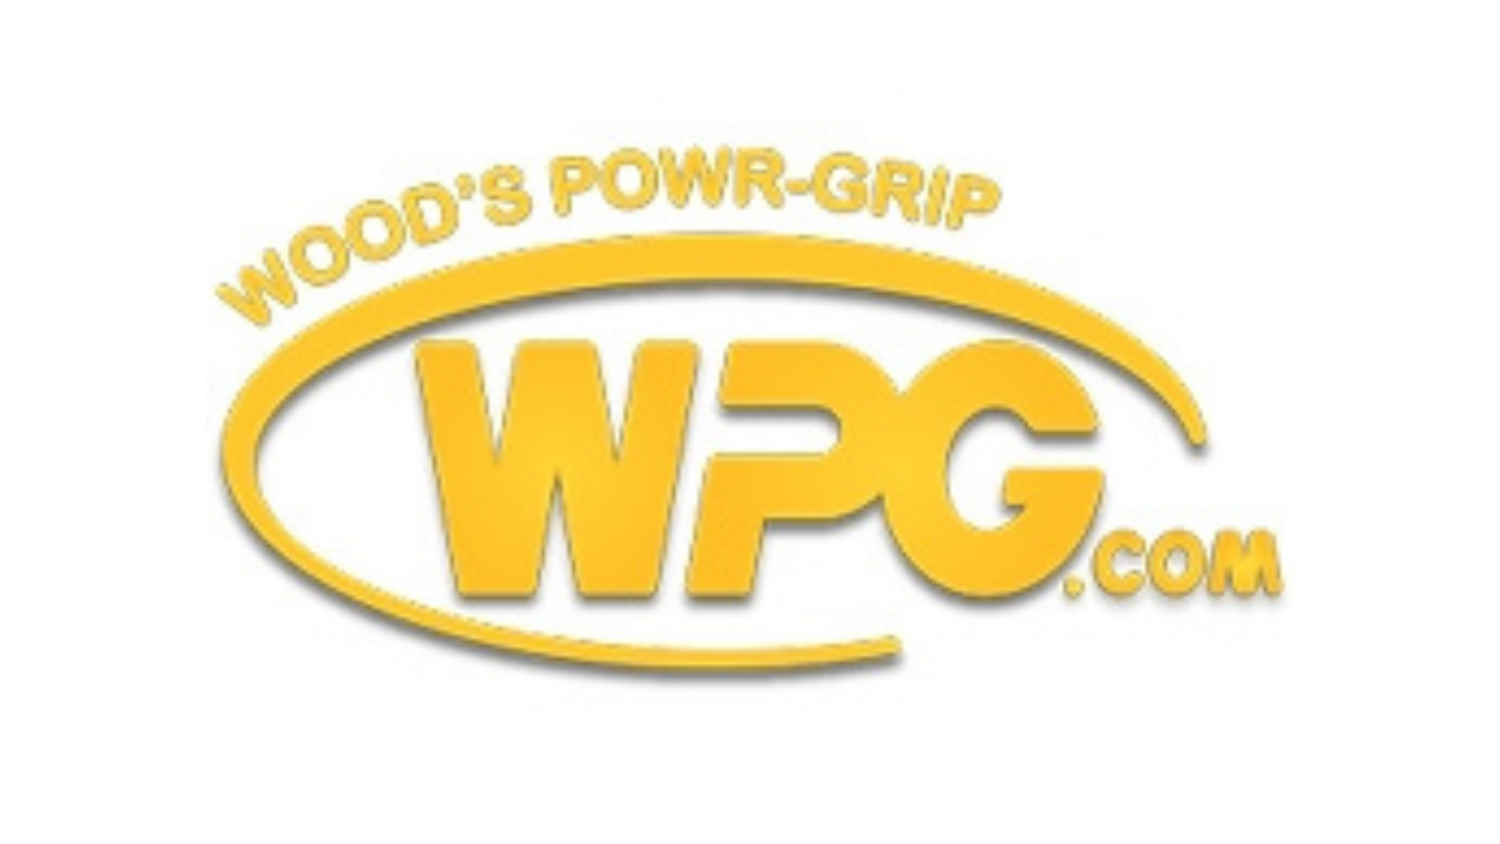 Woods Power Grip